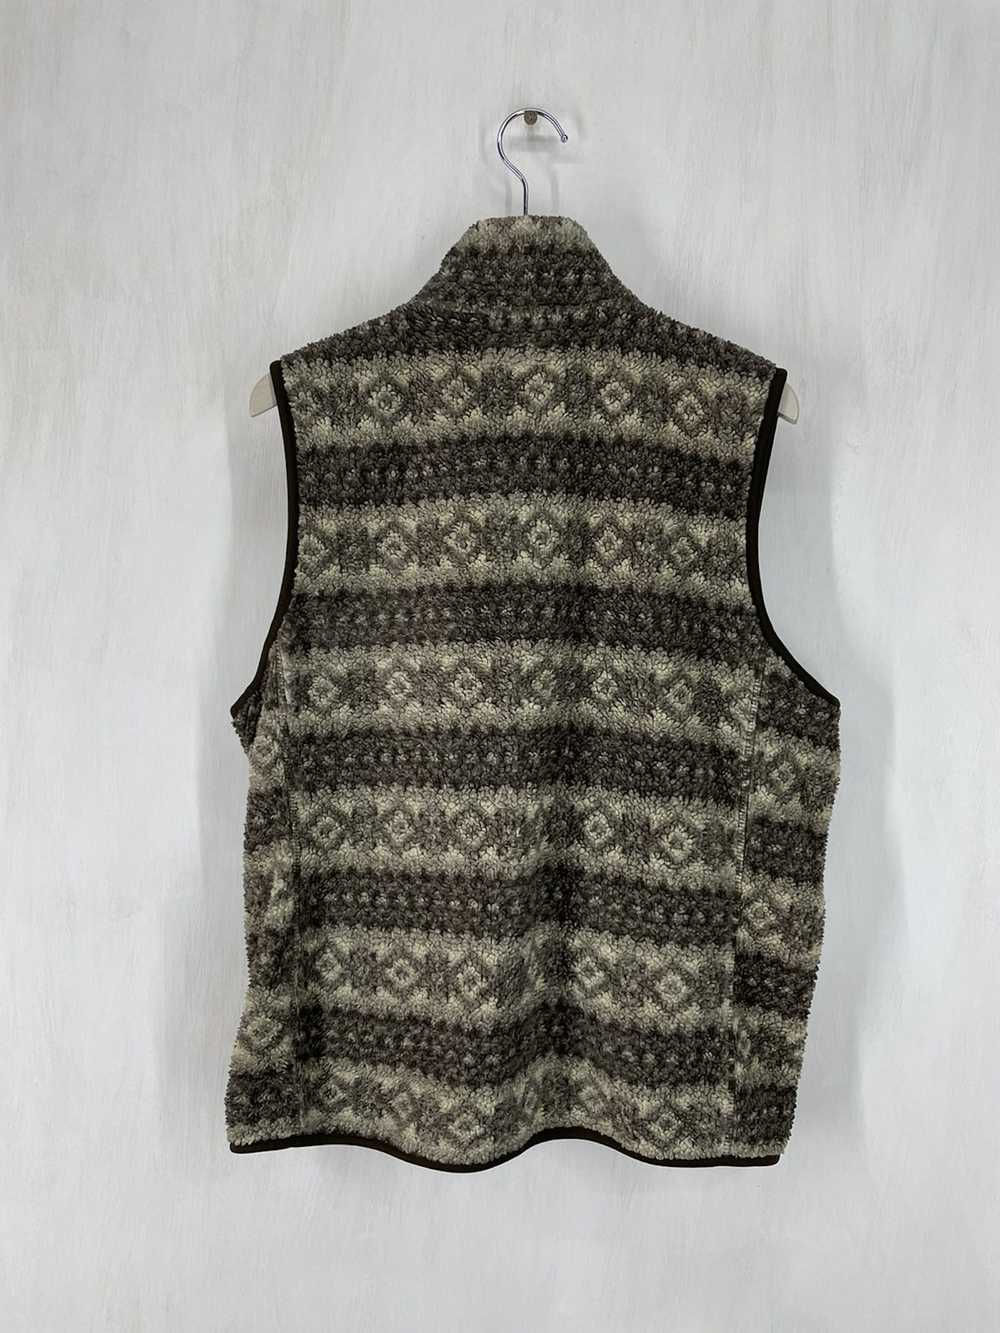 Japanese Brand Shiny Ripple fleece vest - image 2